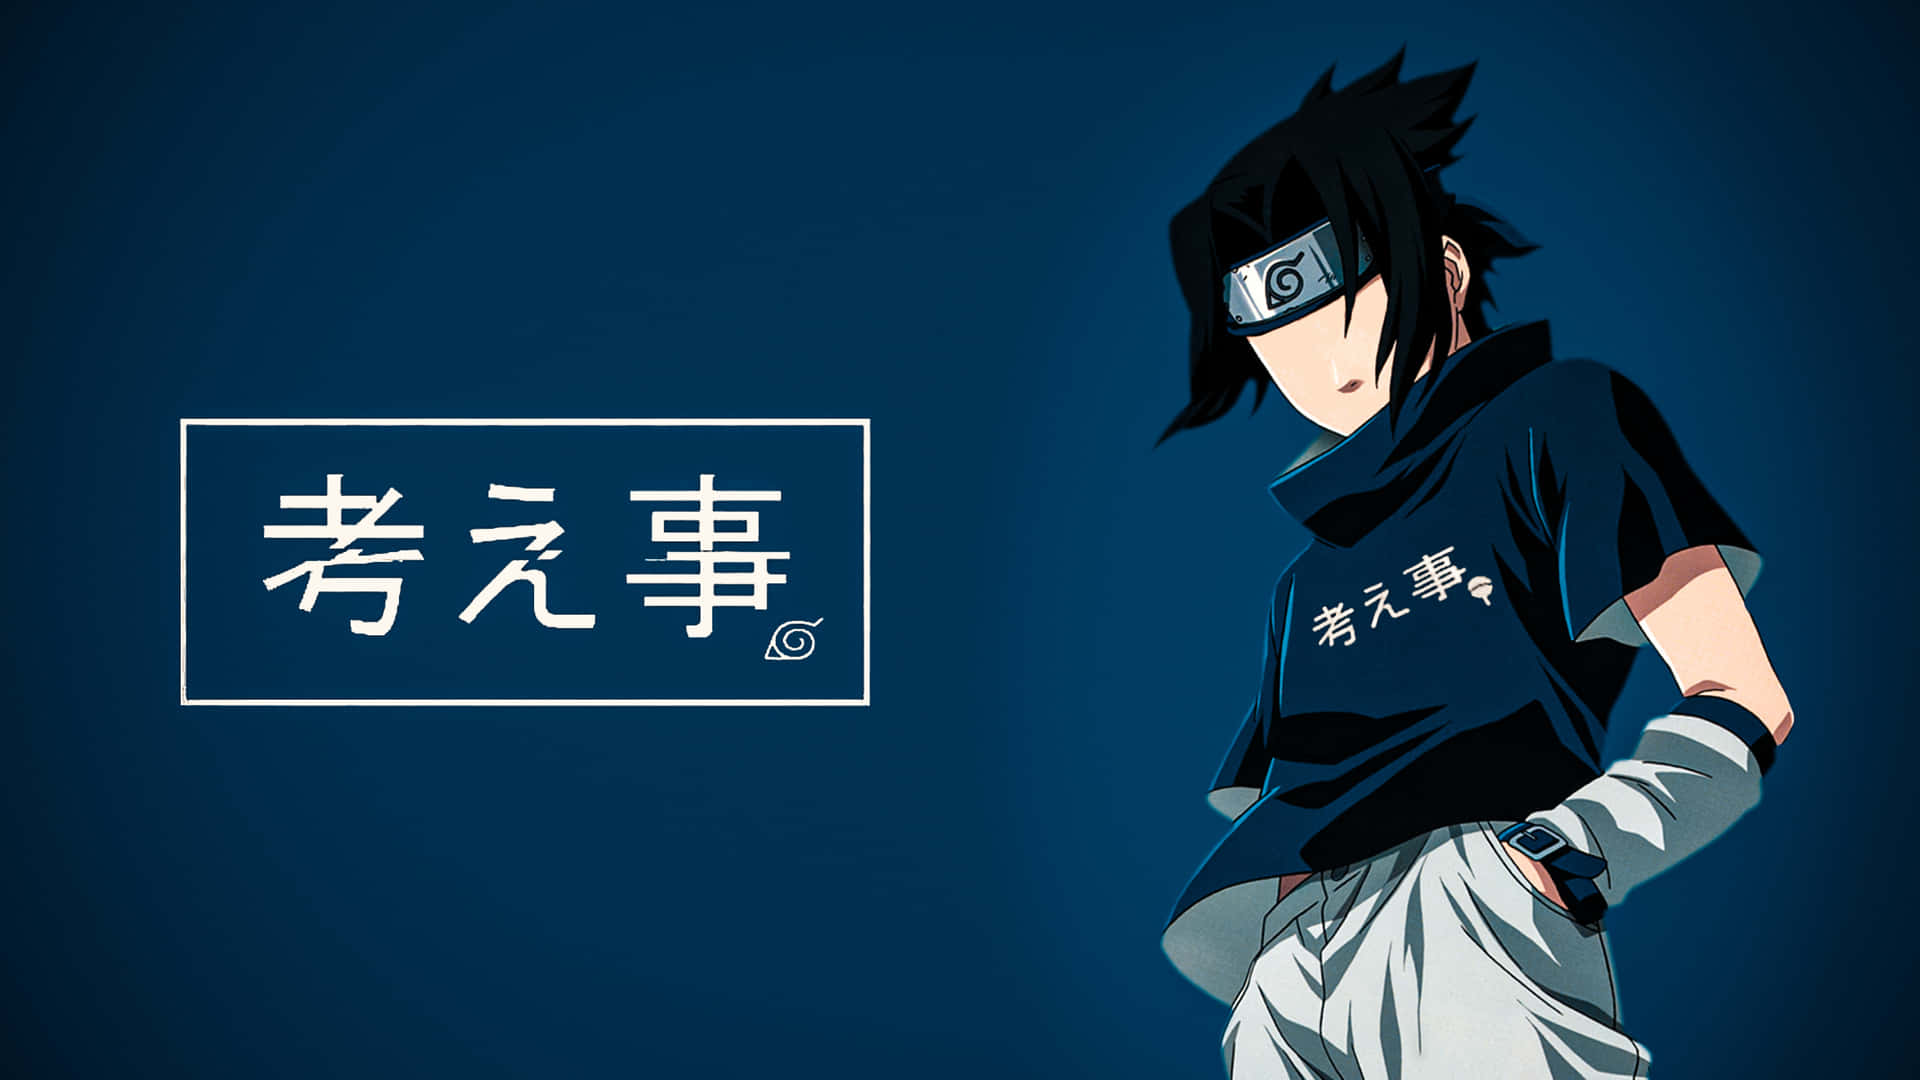 A blue version of Sasuke, the hero from the anime series Naruto Wallpaper